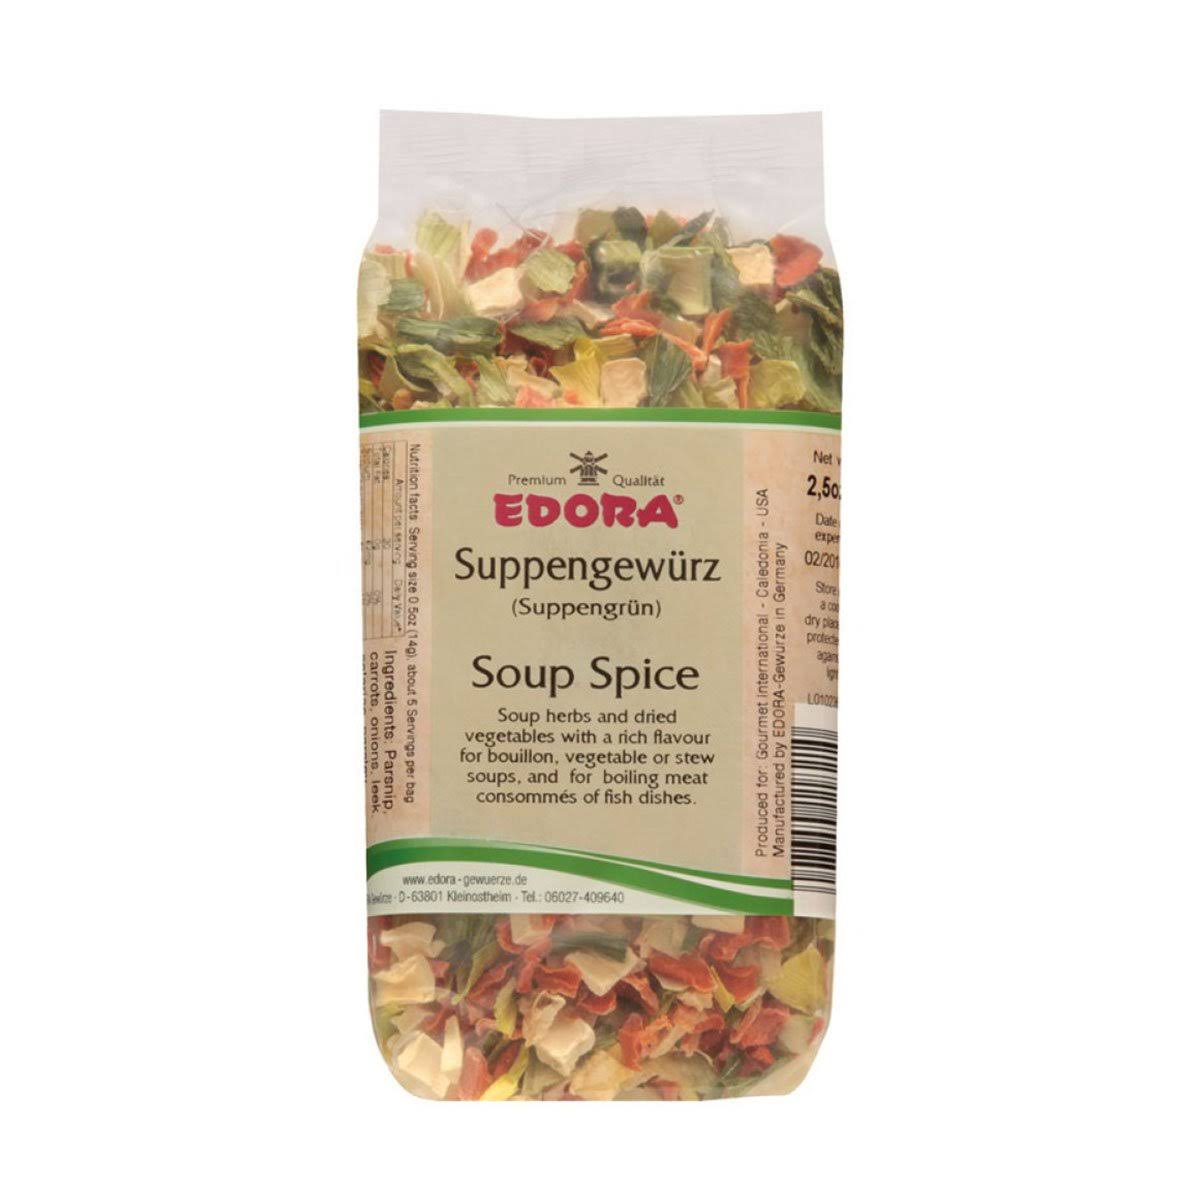 Edora Soup Spice, 2.5 oz., Price/10 Pack